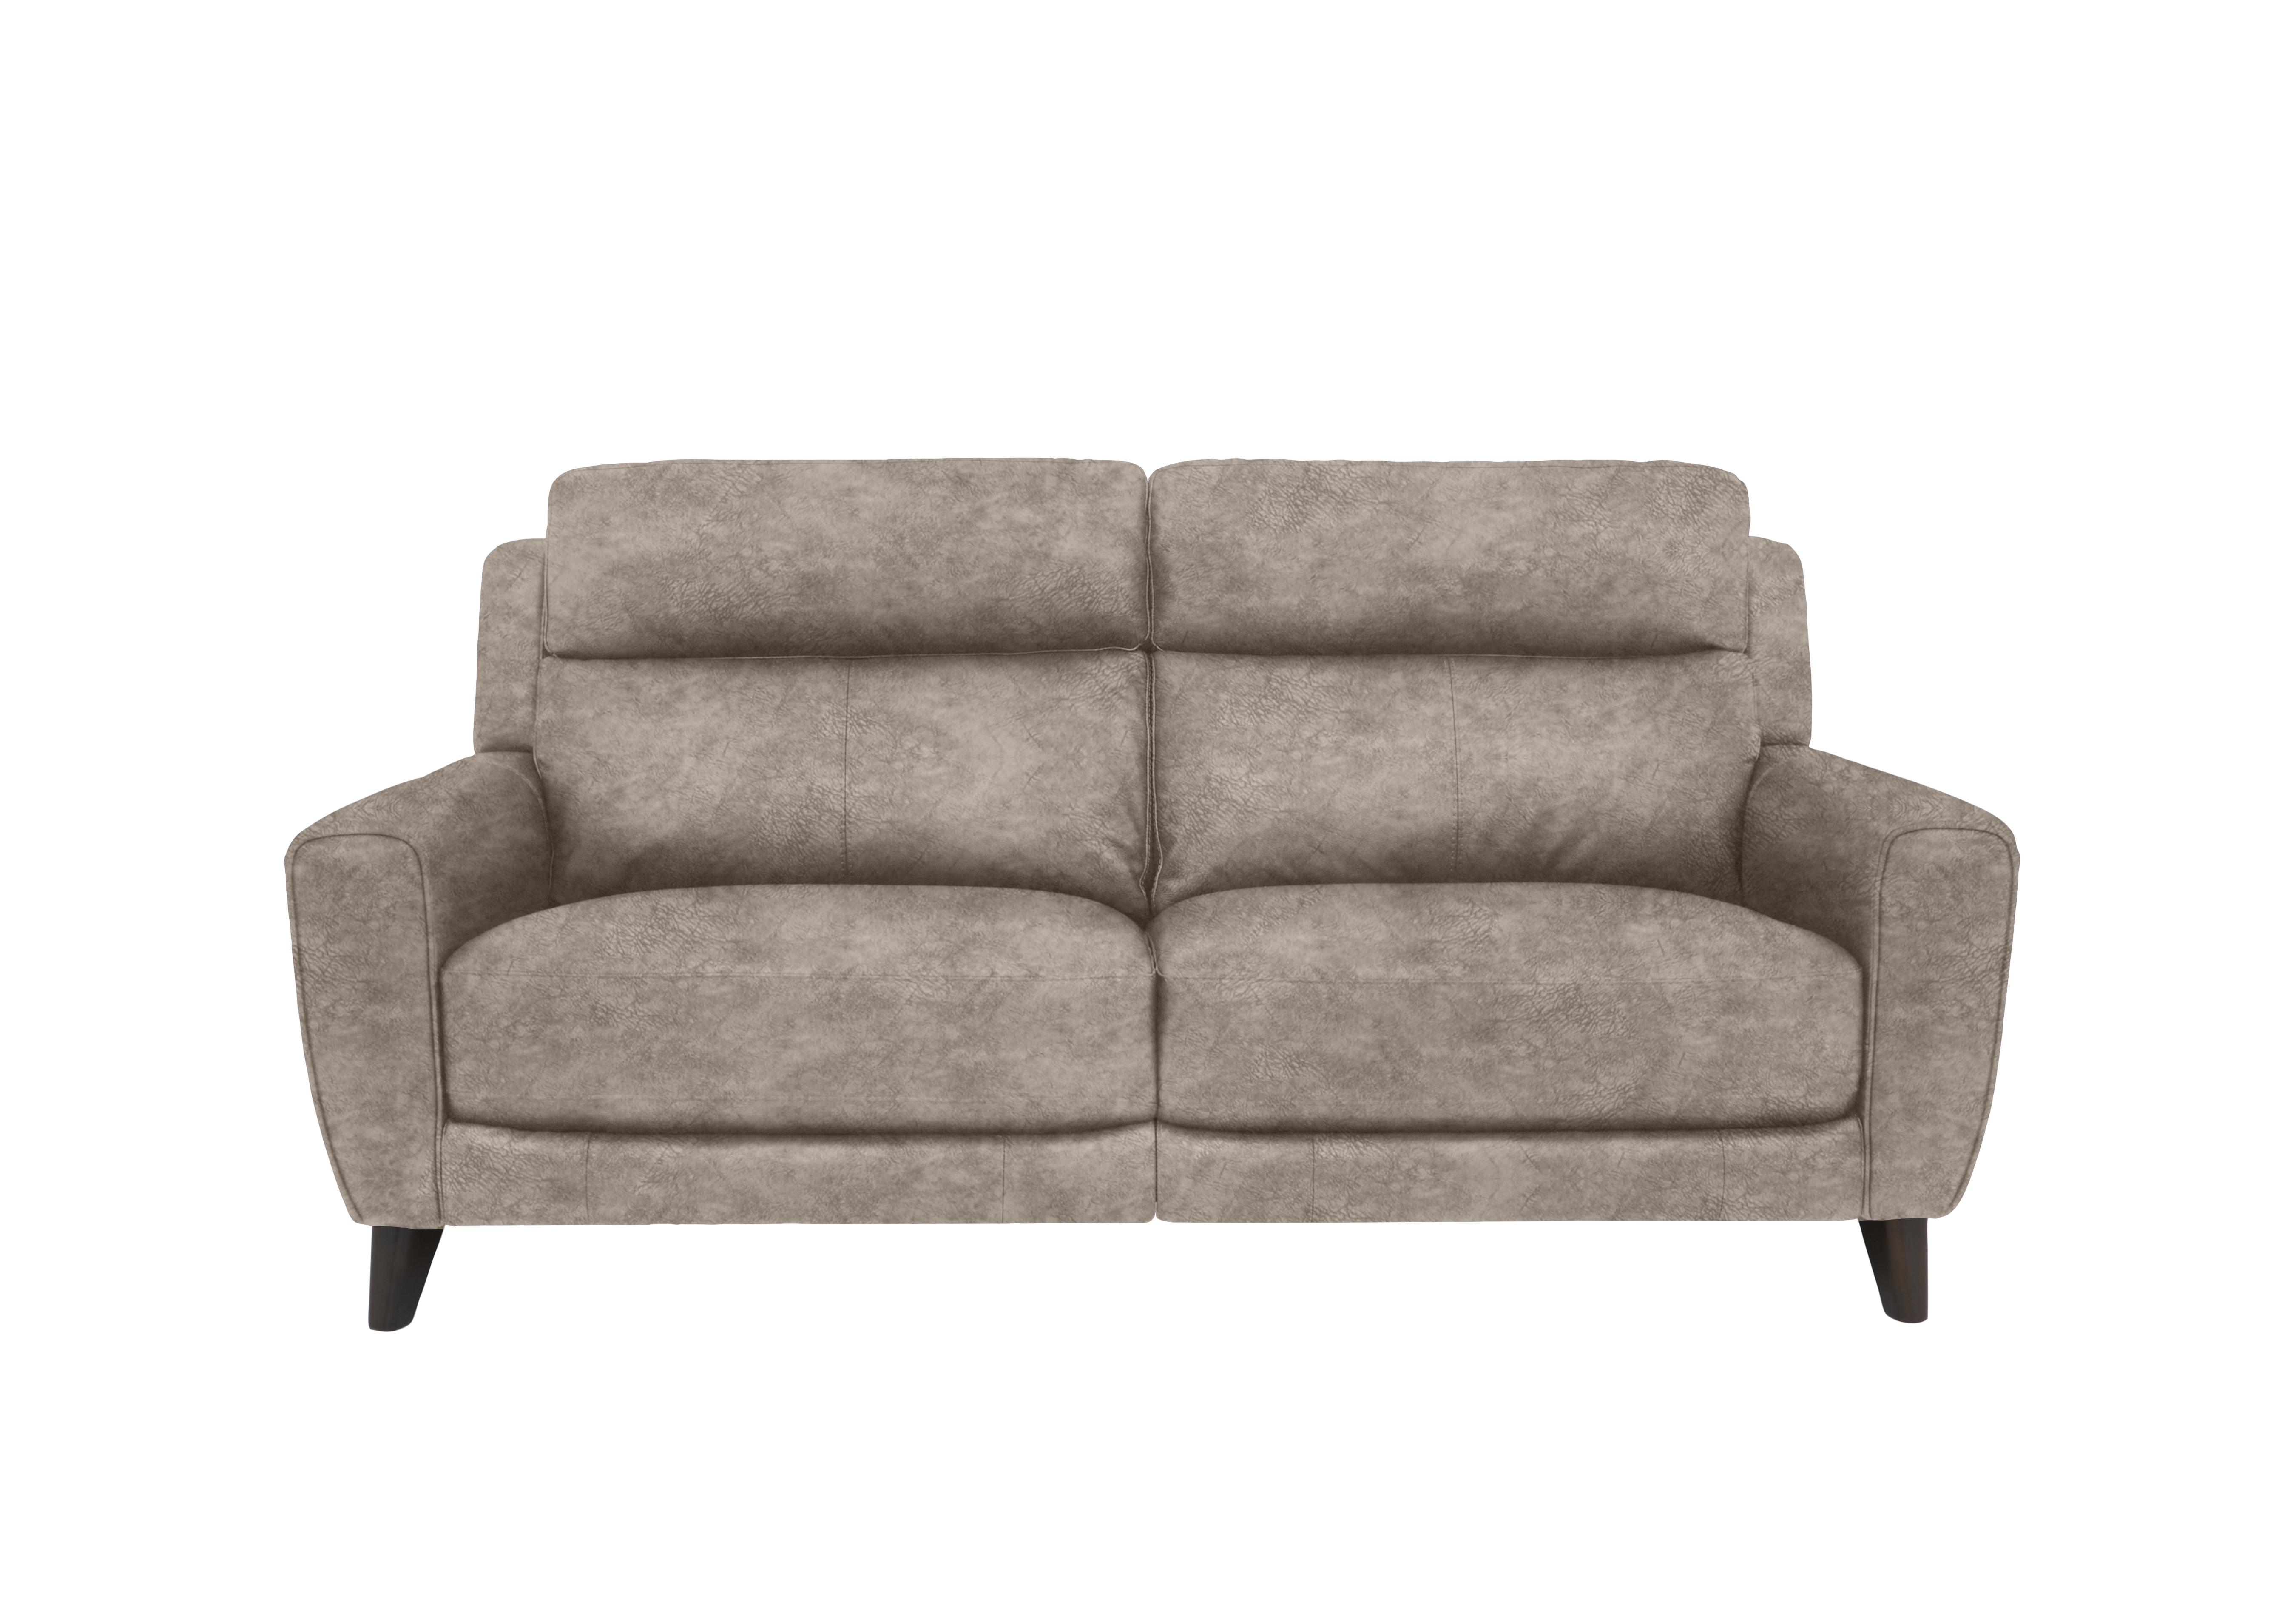 Zen 3 Seater Fabric Sofa in Bfa-Bnn-R29 Mink on Furniture Village